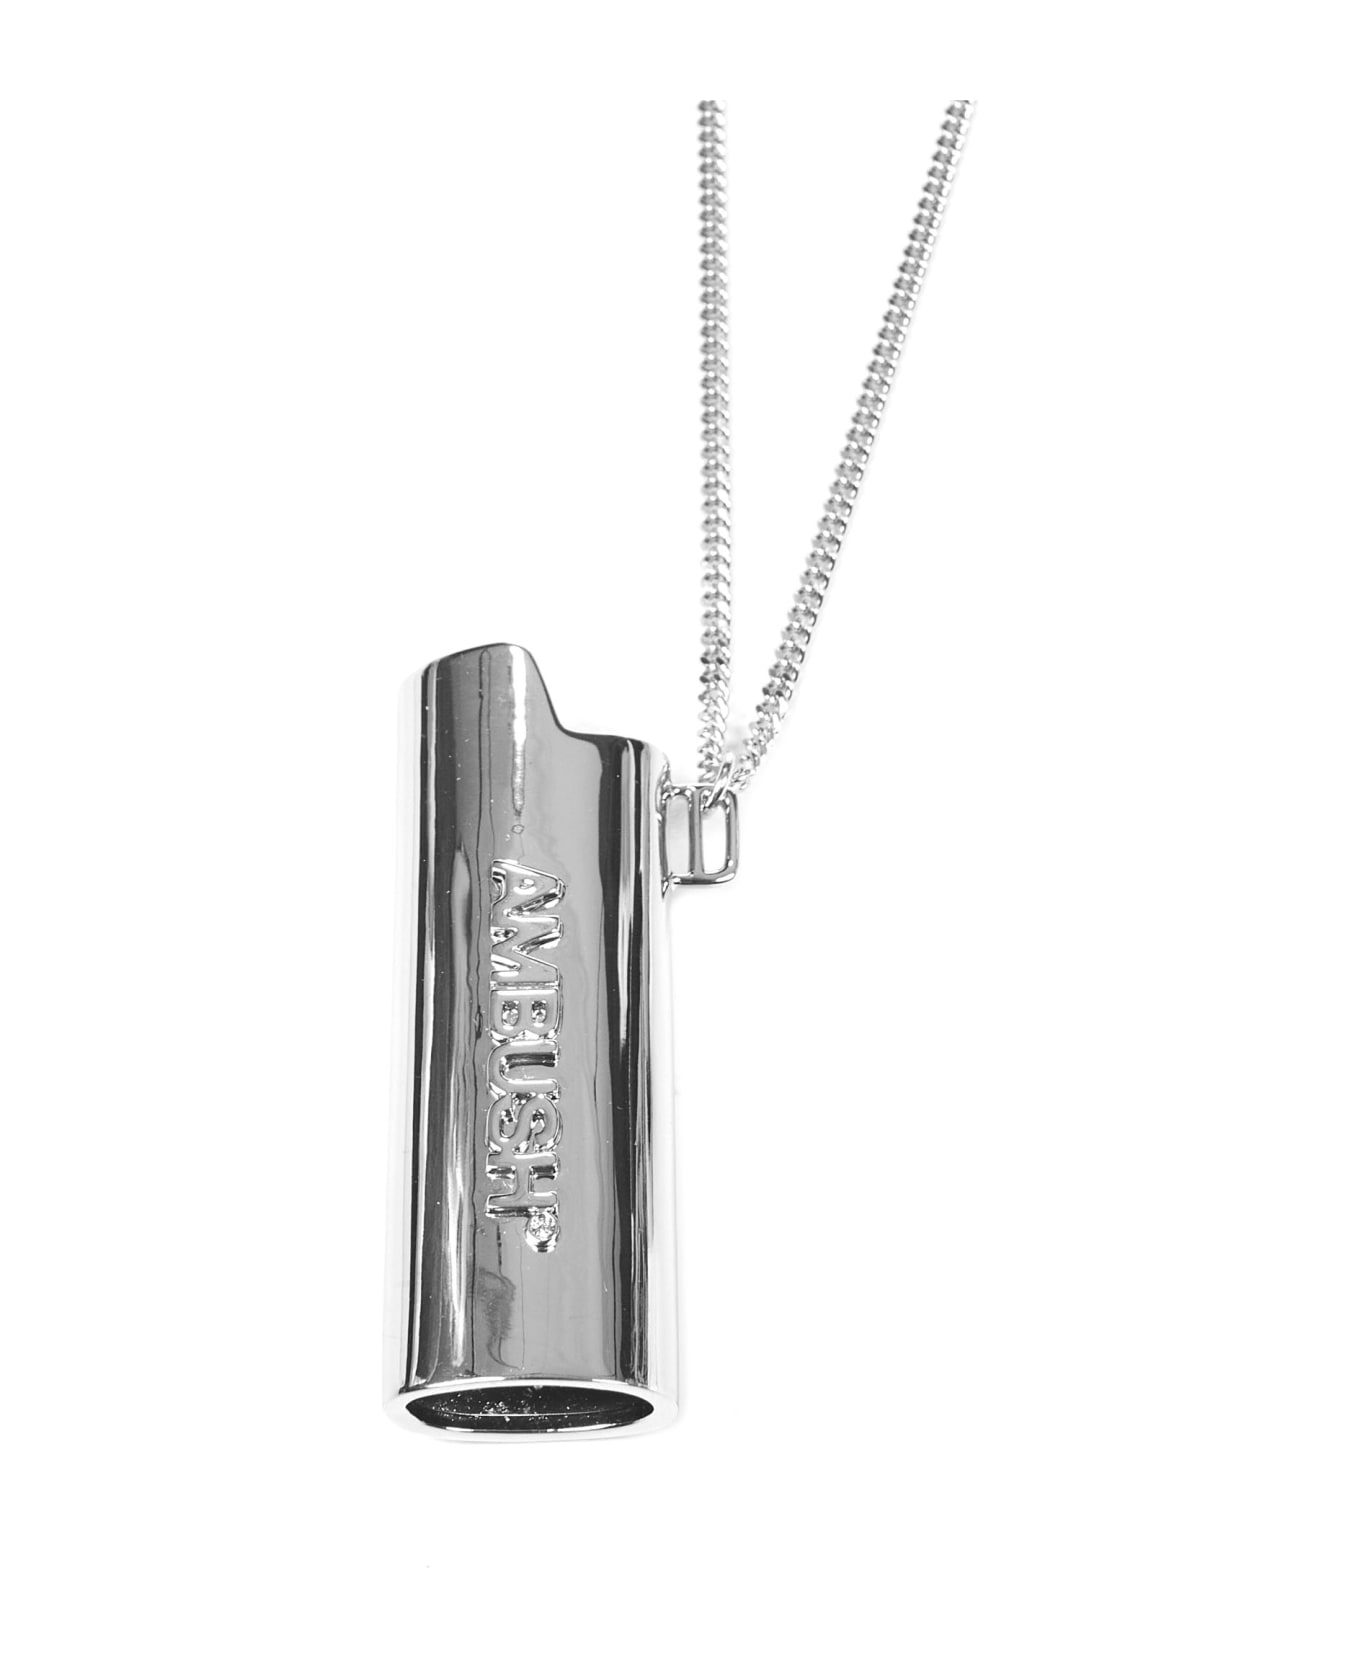 AMBUSH Lighter Case Necklace - Silver